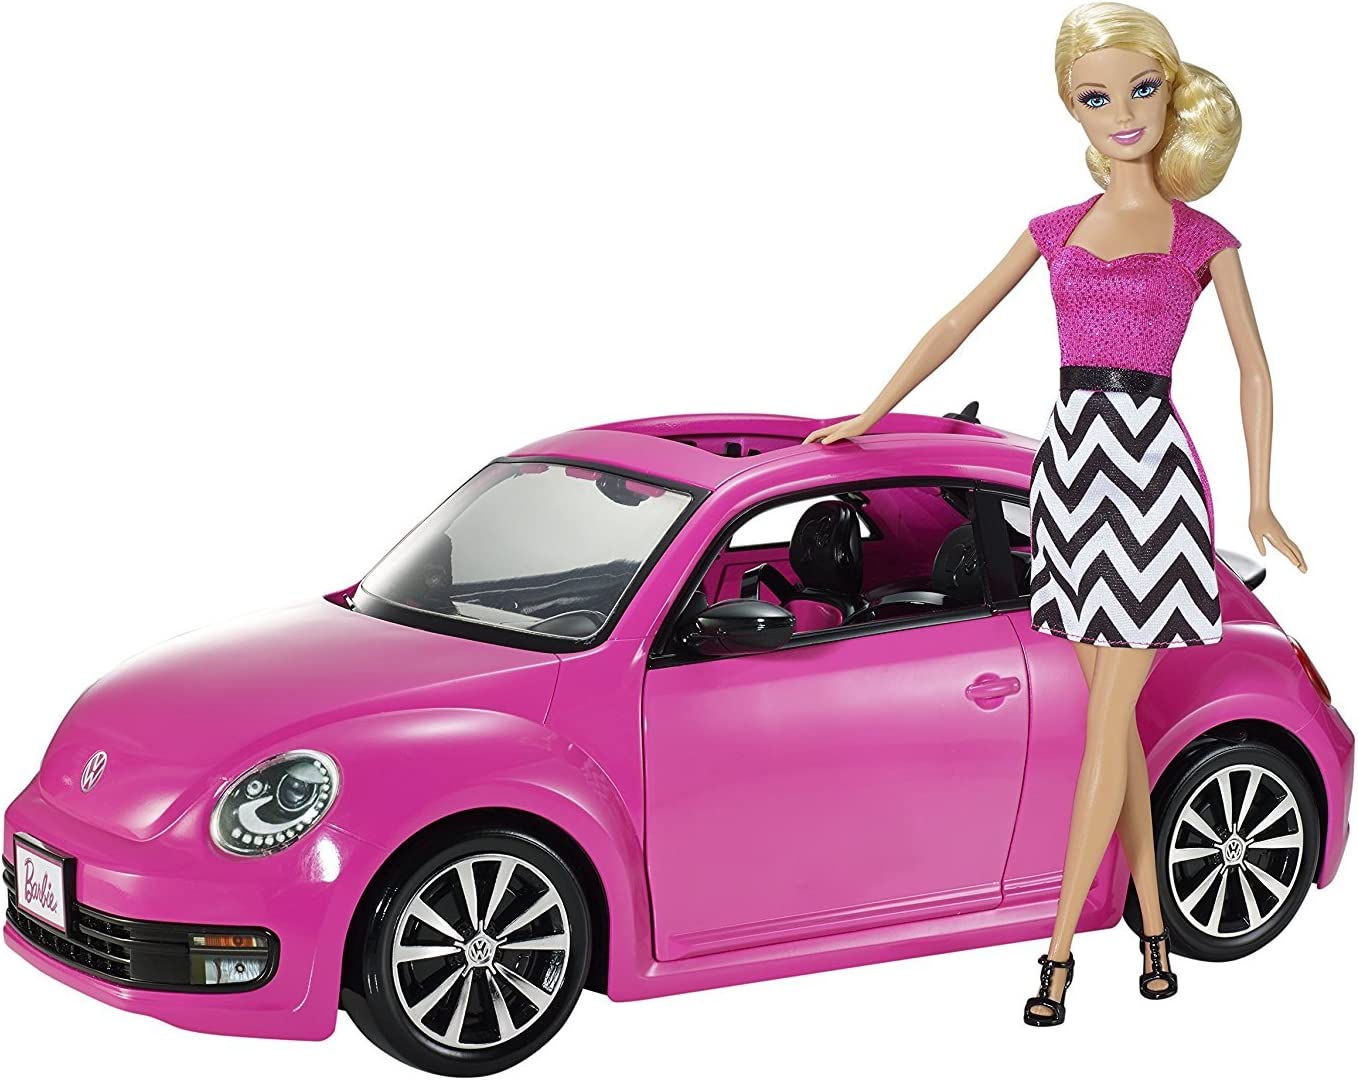 Qué es un Volkswagen Beetle de Barbie